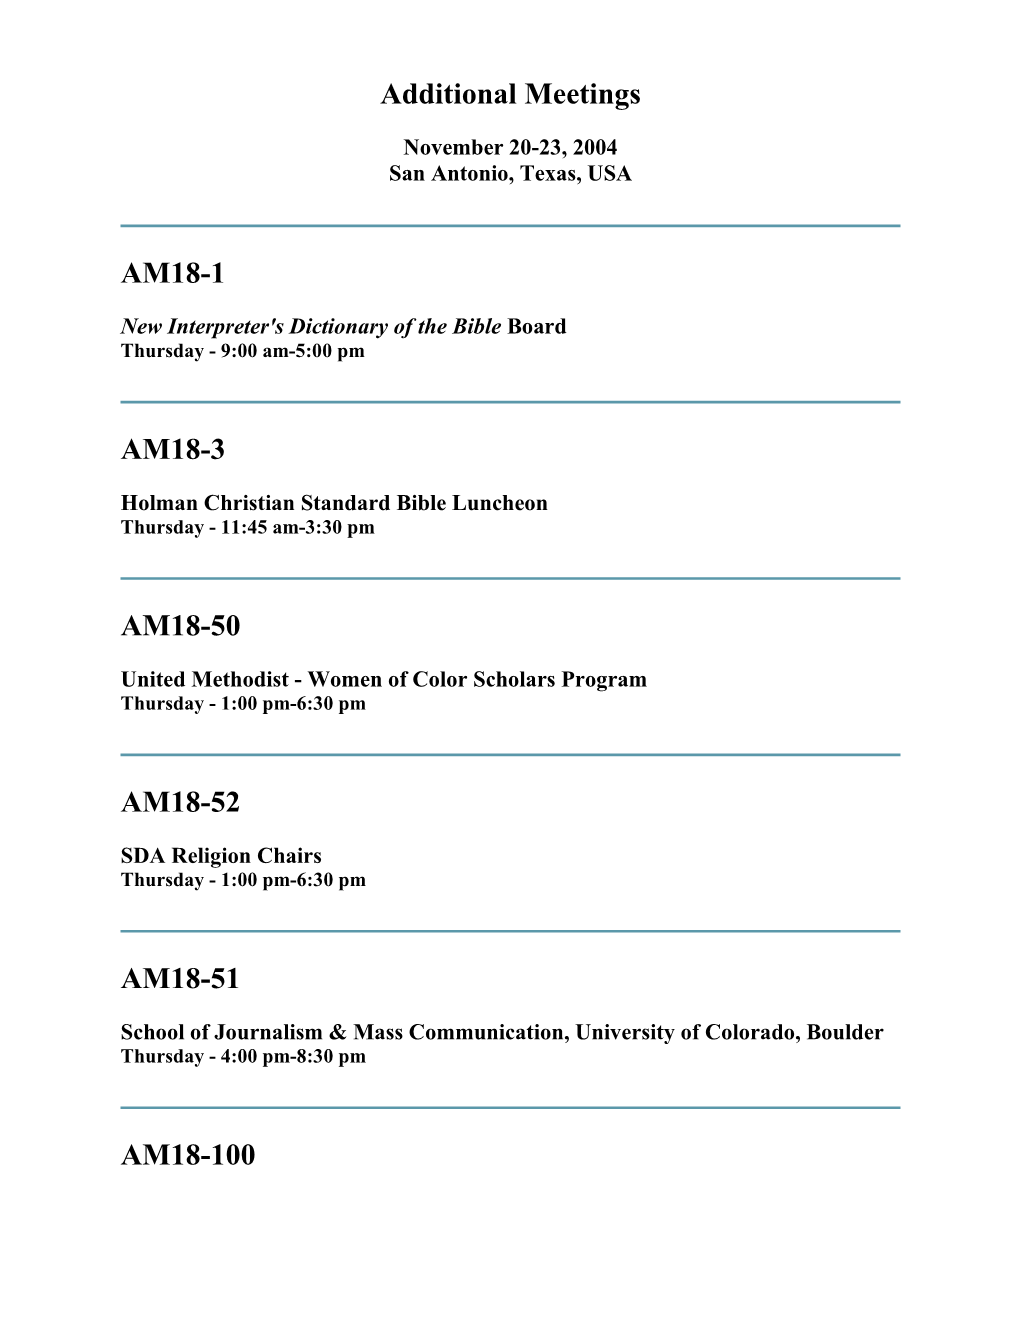 Additional Meetings (PDF)